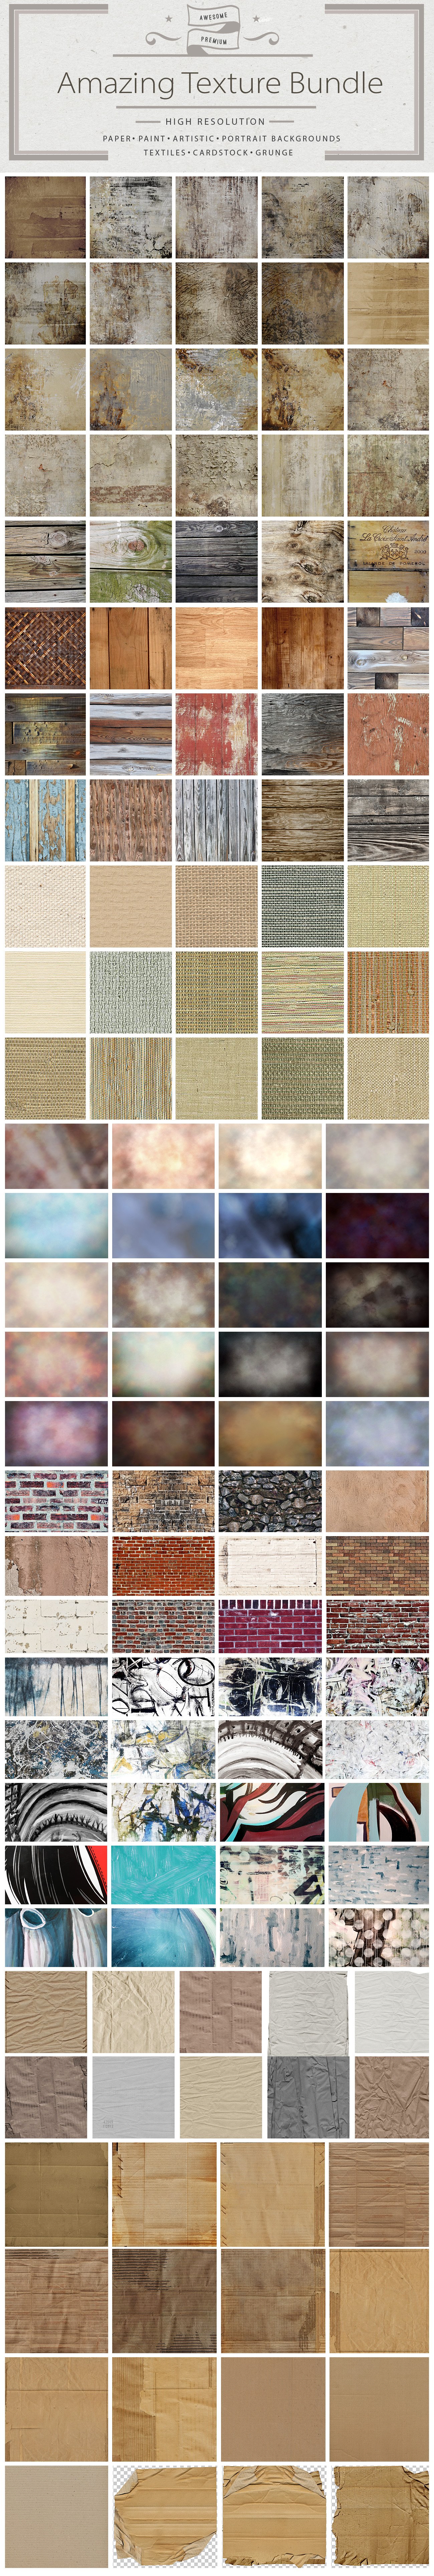 Artist Textures & Backgrounds Bundle preview image.